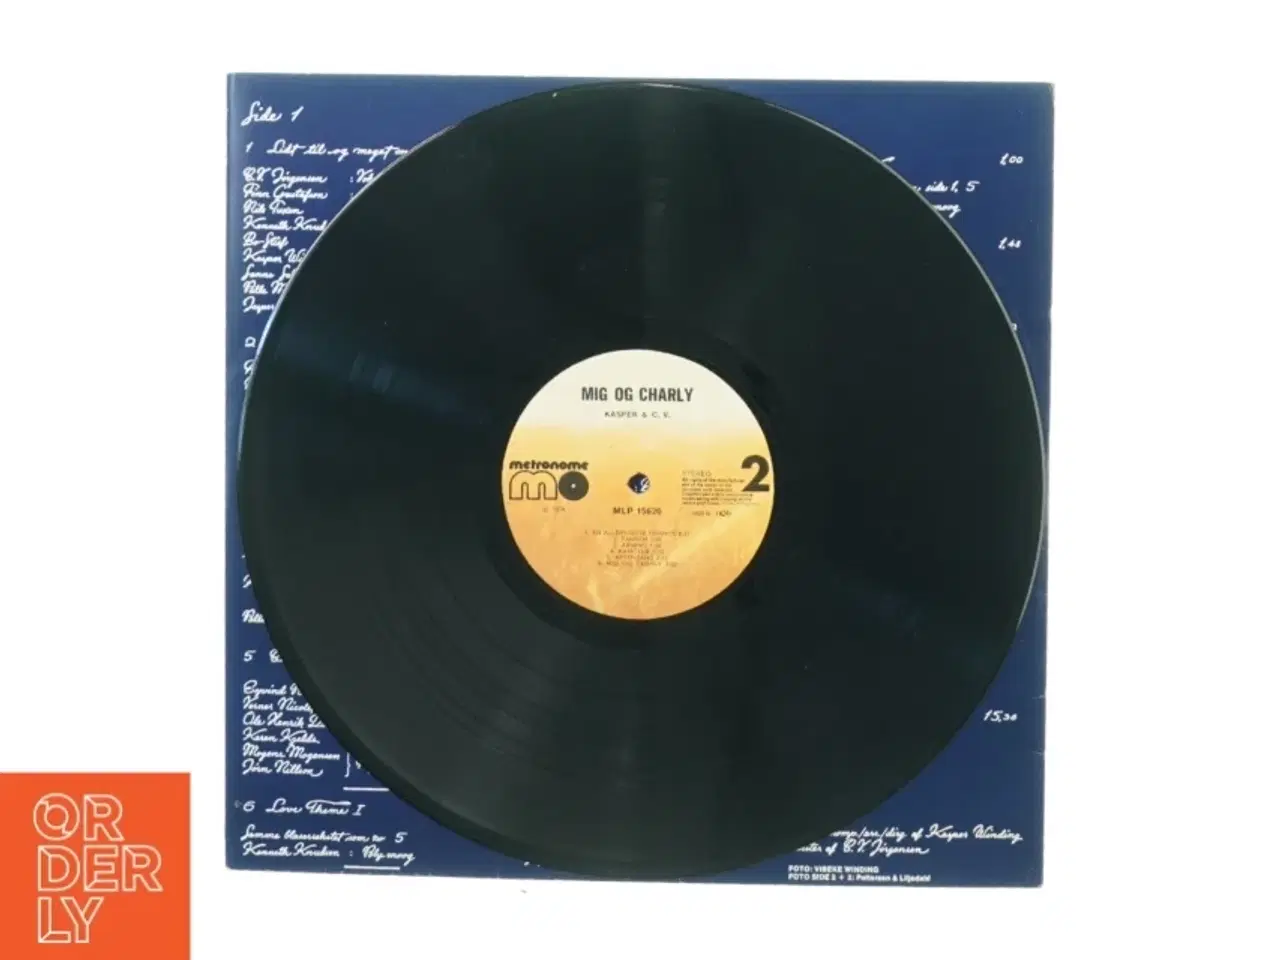 Billede 3 - Kasper winding: Mig og charly (LP) fra Metronome (str. 30 cm)